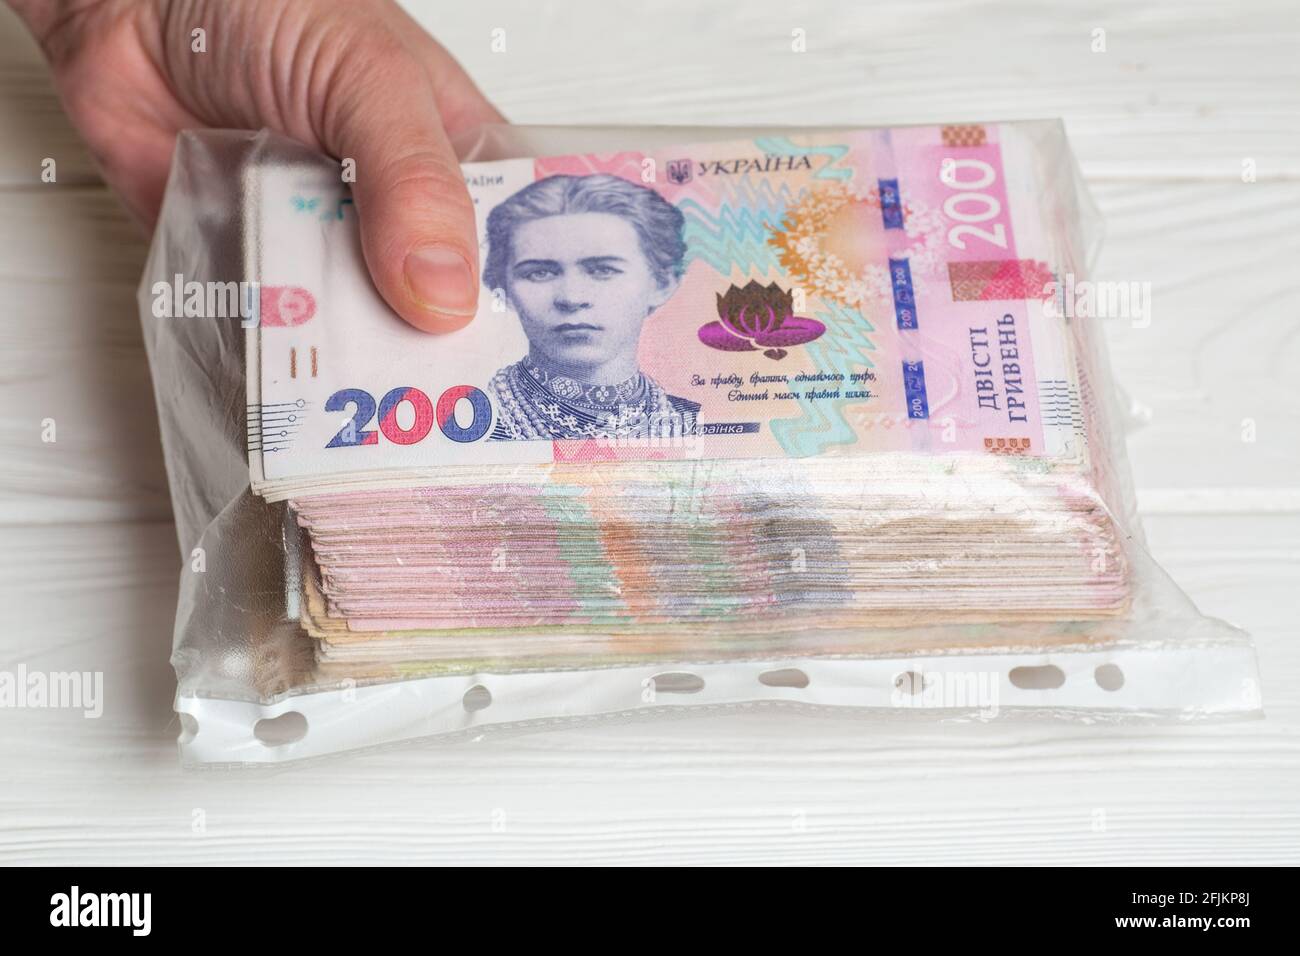 Money of Ukraine. Stack of ukrainian hryvnia banknotes in plastic transparent bag in hands Stock Photo